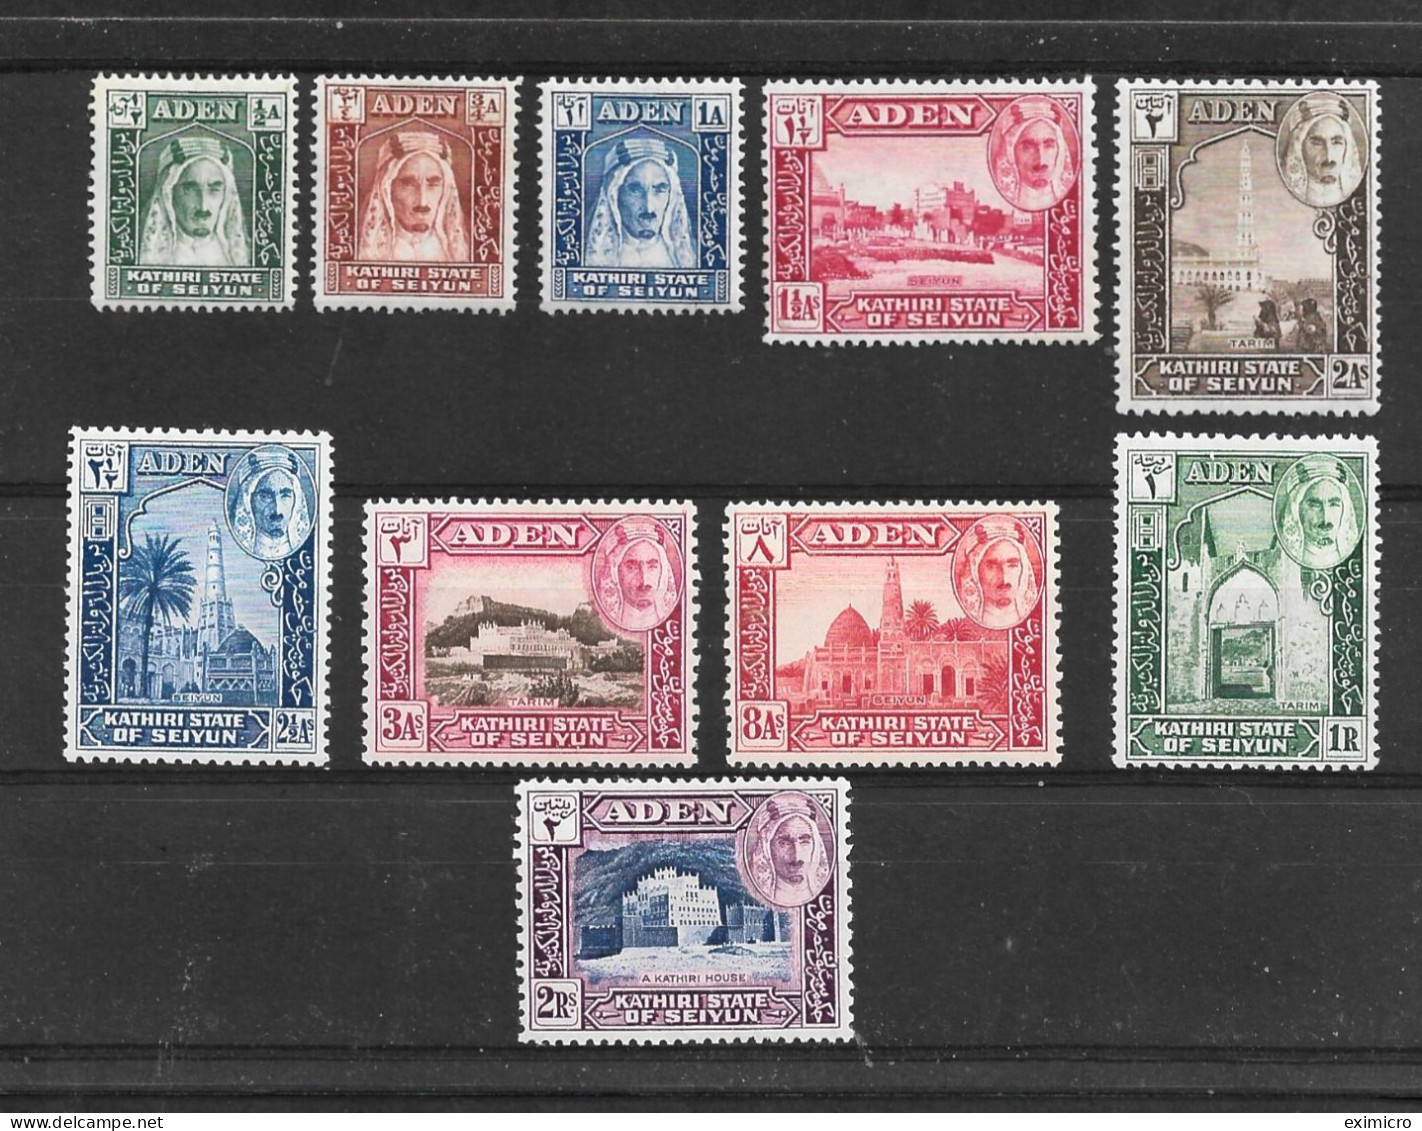 ADEN - KATHIRI STATE OF SEIYUN 1942 SET TO 2R SG 1/10 MOUNTED MINT Cat £36+ - Aden (1854-1963)